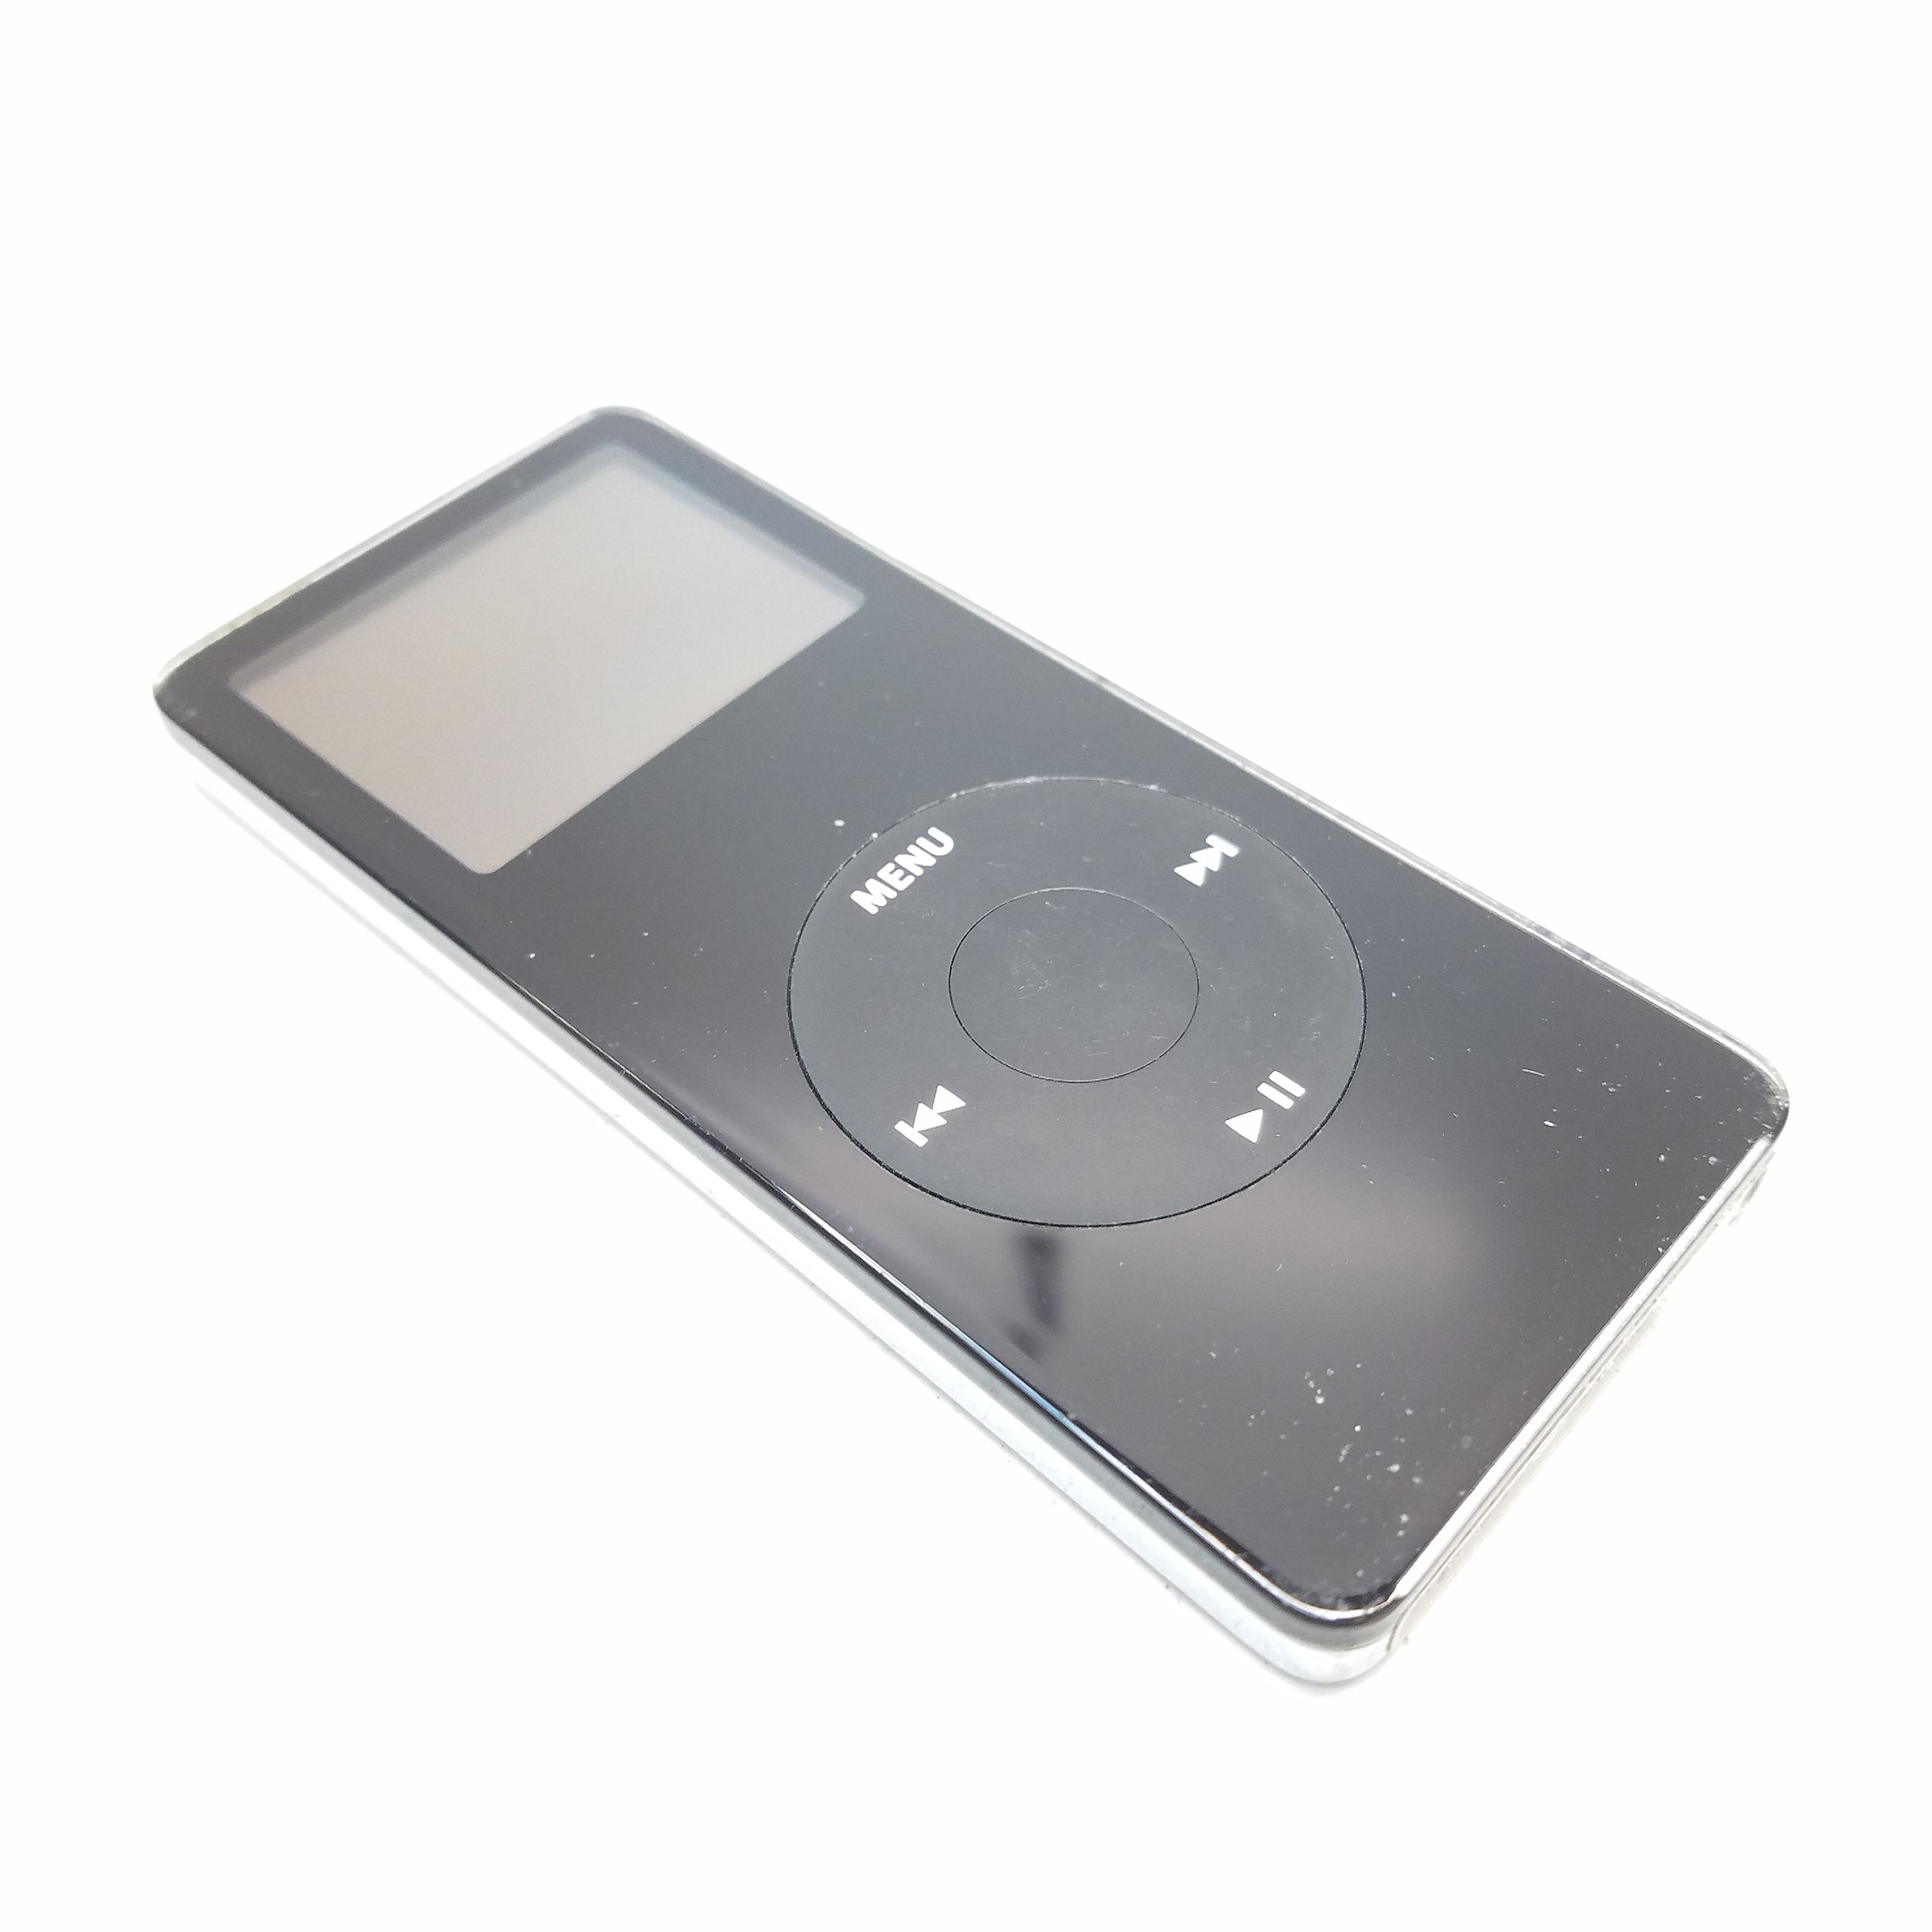 Buy the Apple iPod Nano (1st Generation) - Black (A1137) 2GB